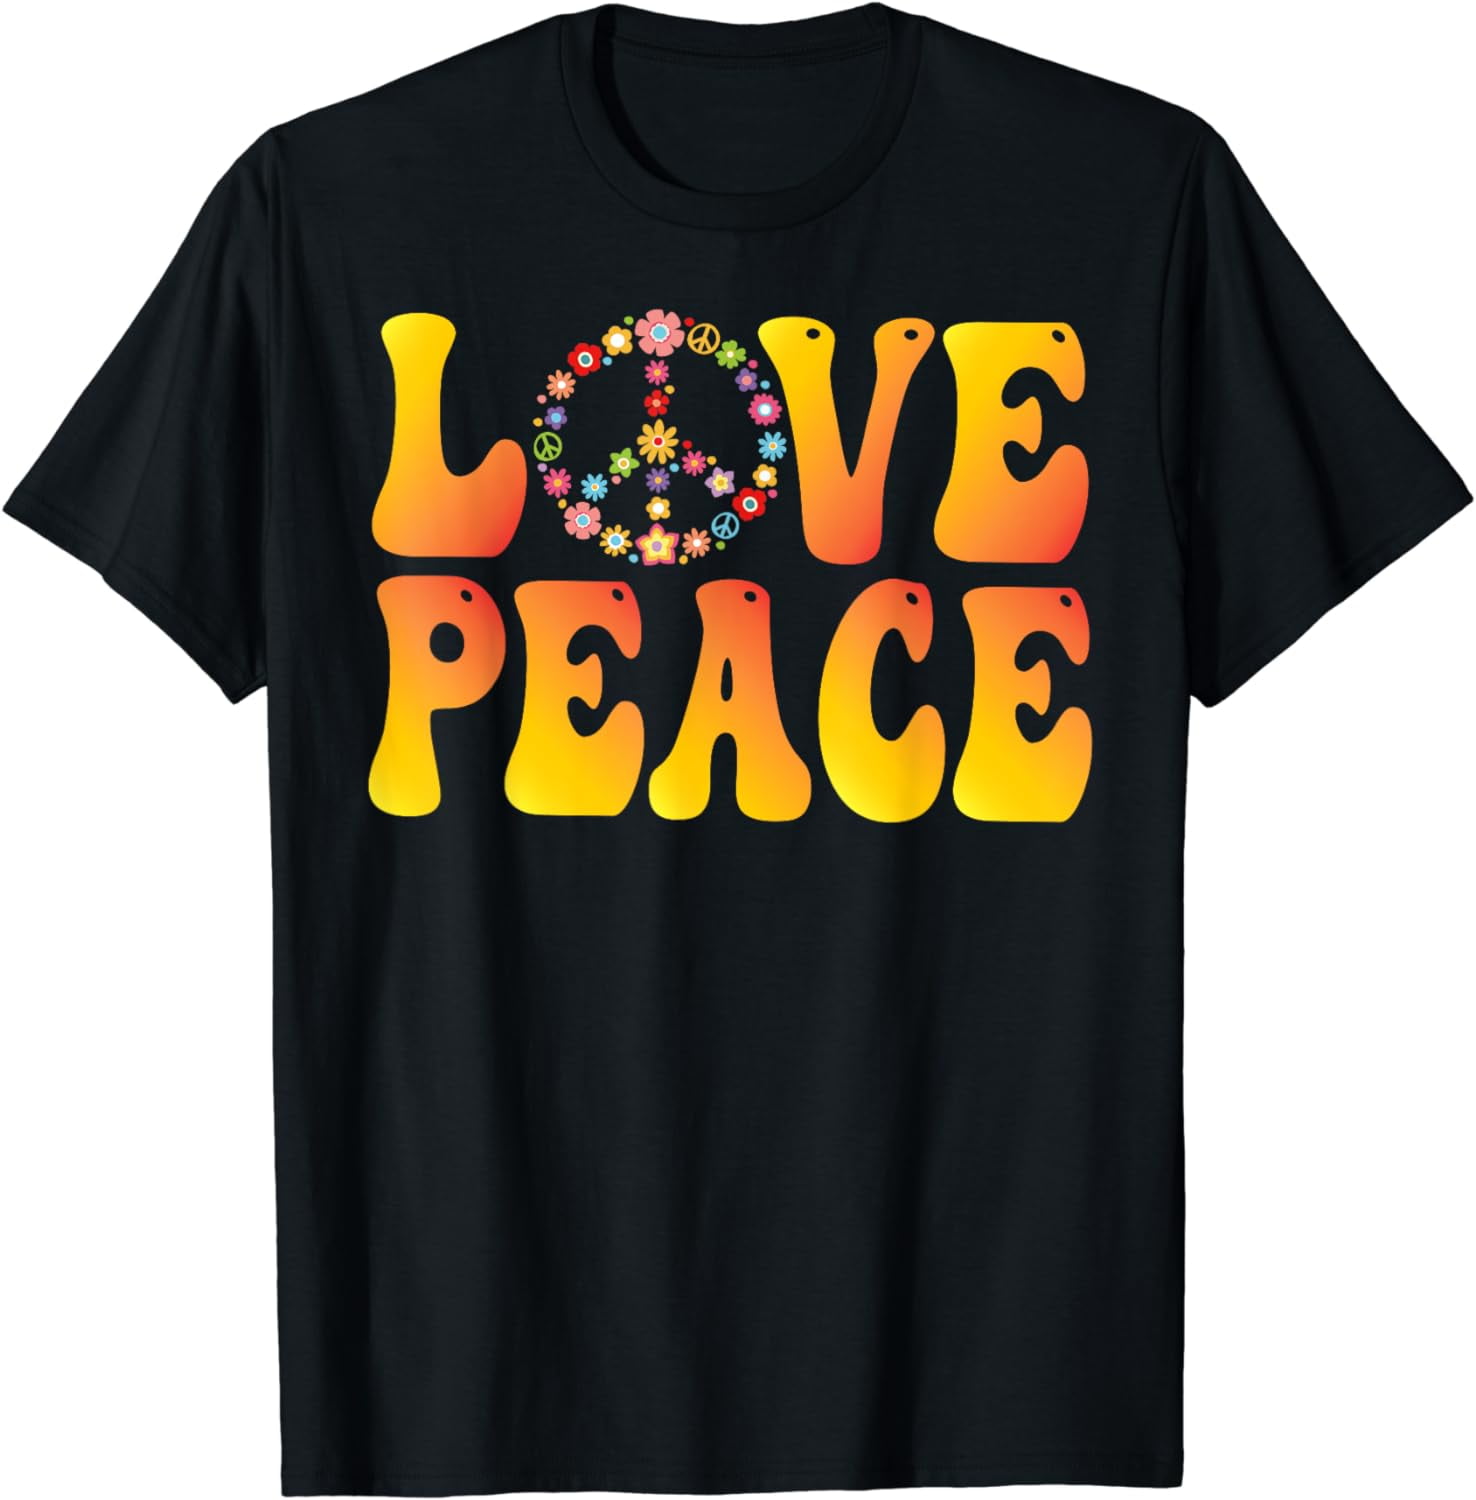 LOVE PEACE FREEDOM 60s 70s Tie Dye Vintage Hippie Costume T-Shirt ...